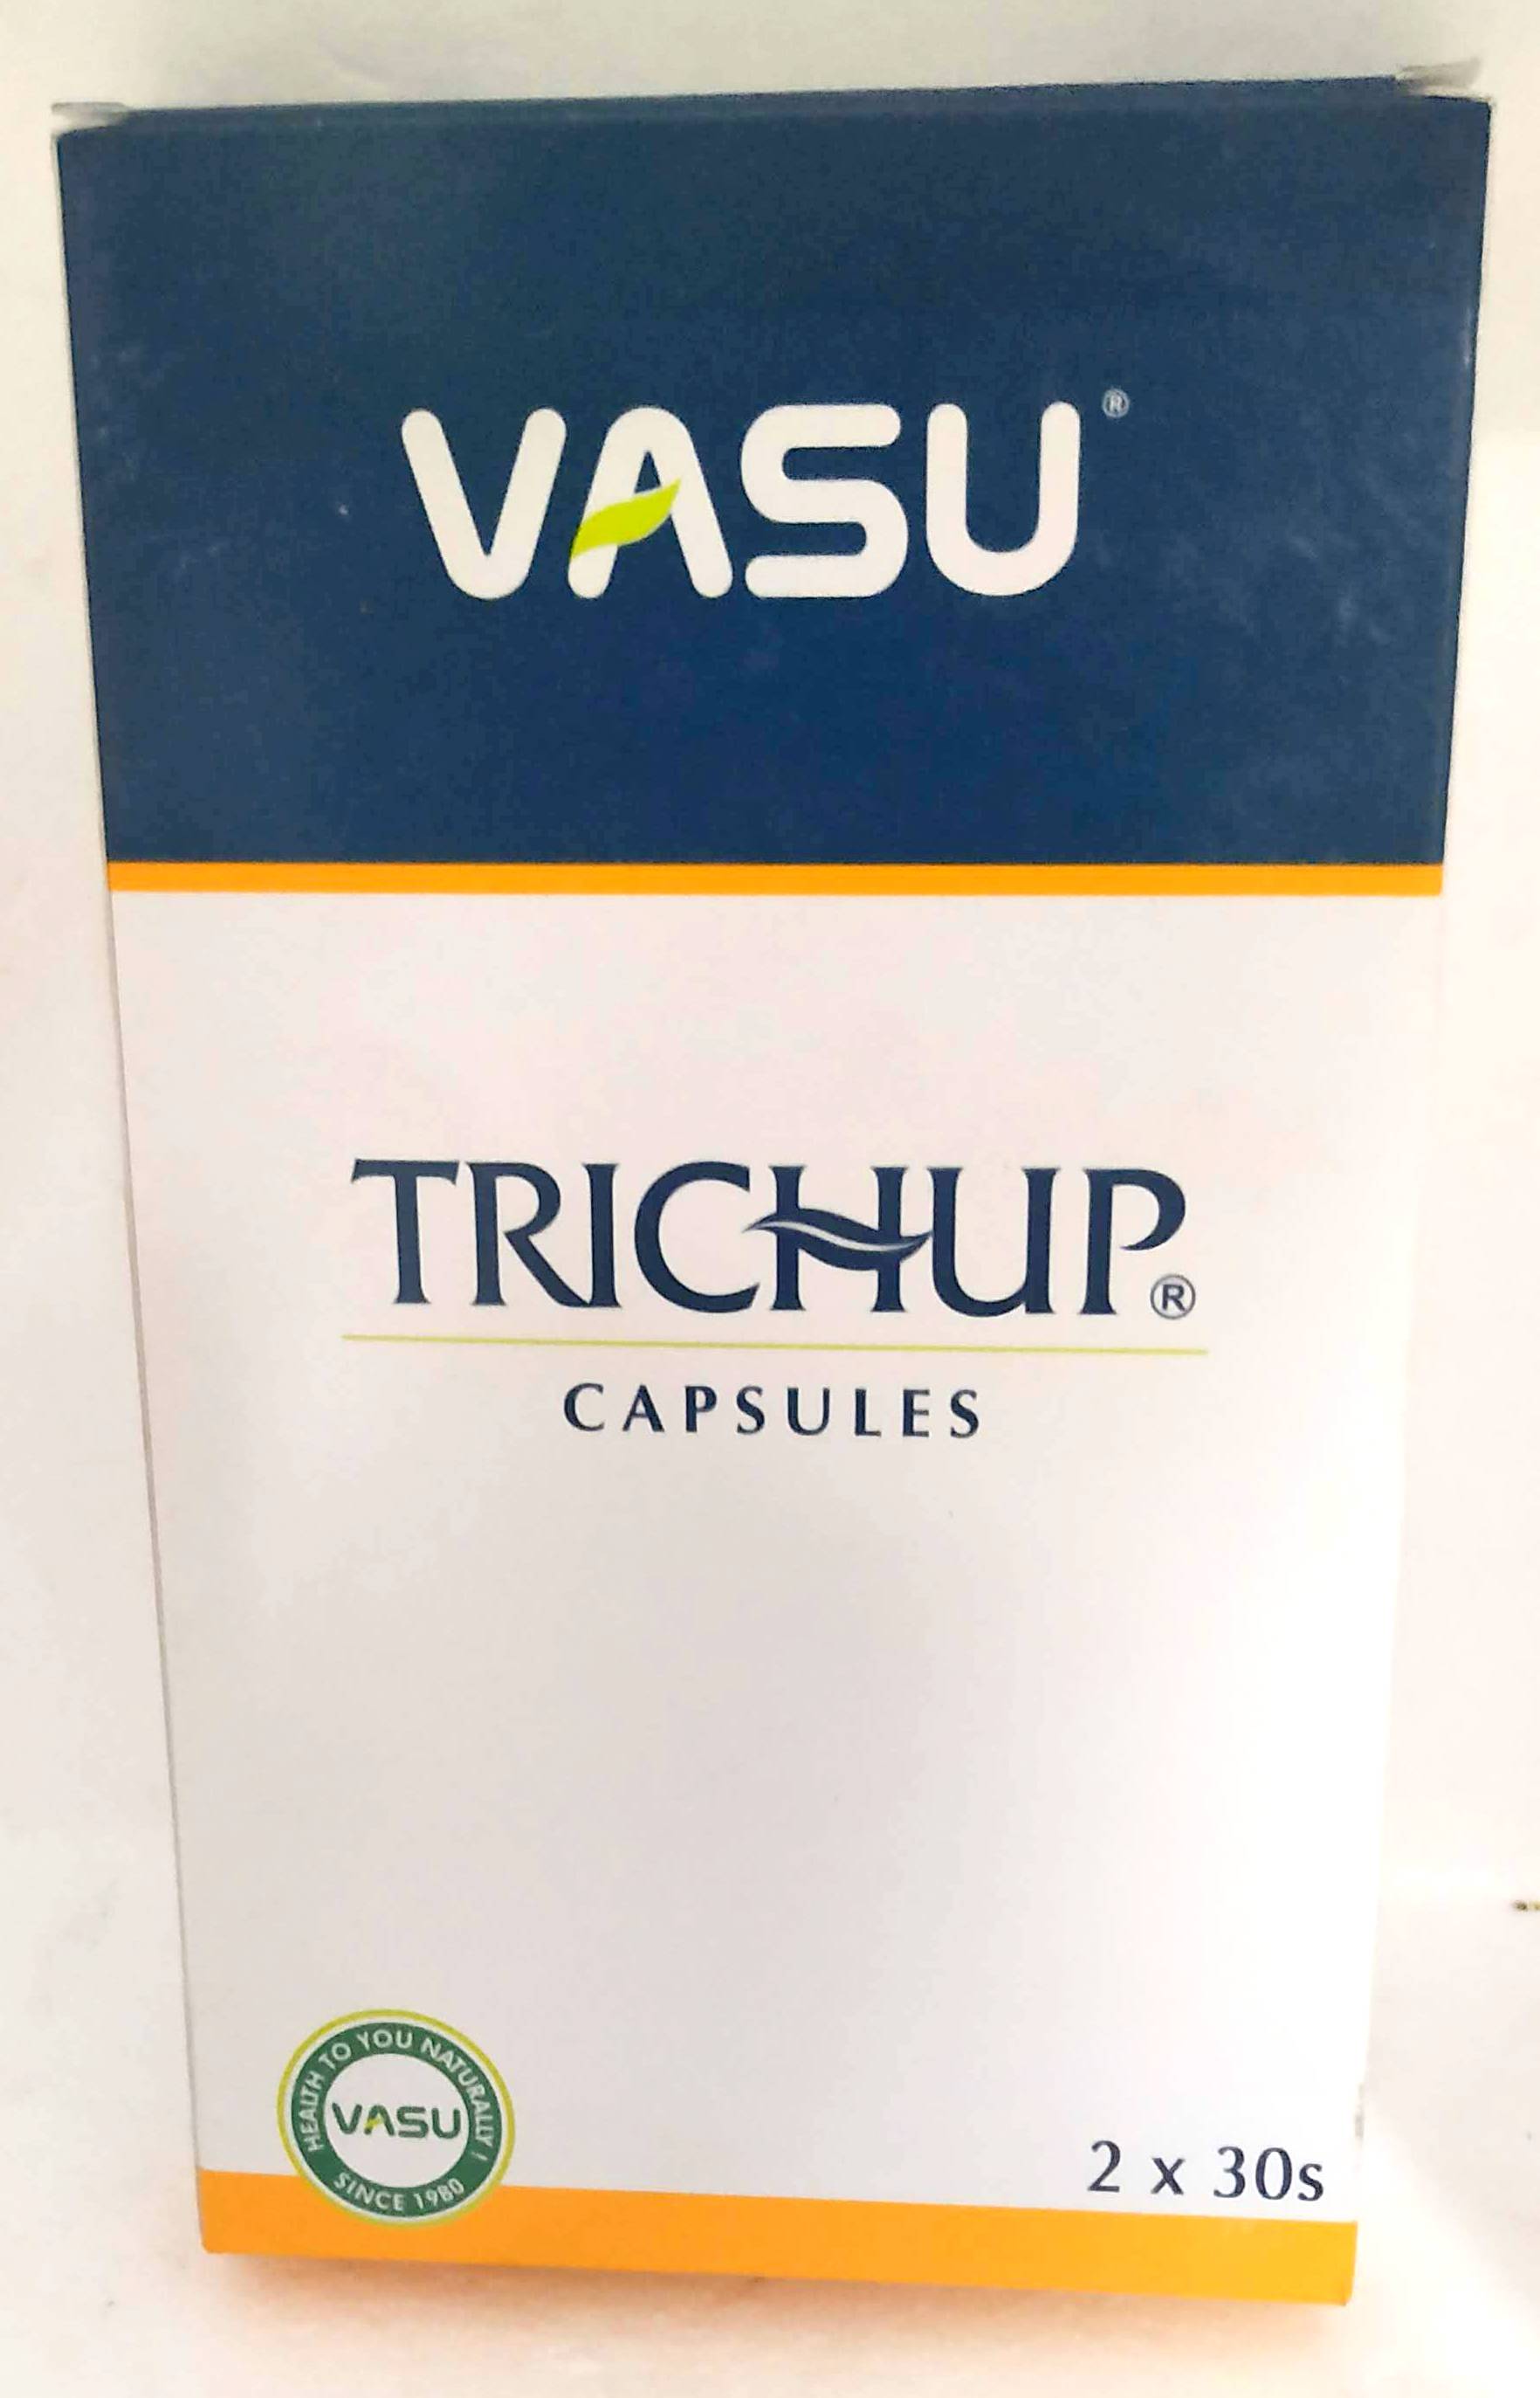 Shop Trichup capsules - 10Capsules at price 60.00 from Vasu herbals Online - Ayush Care